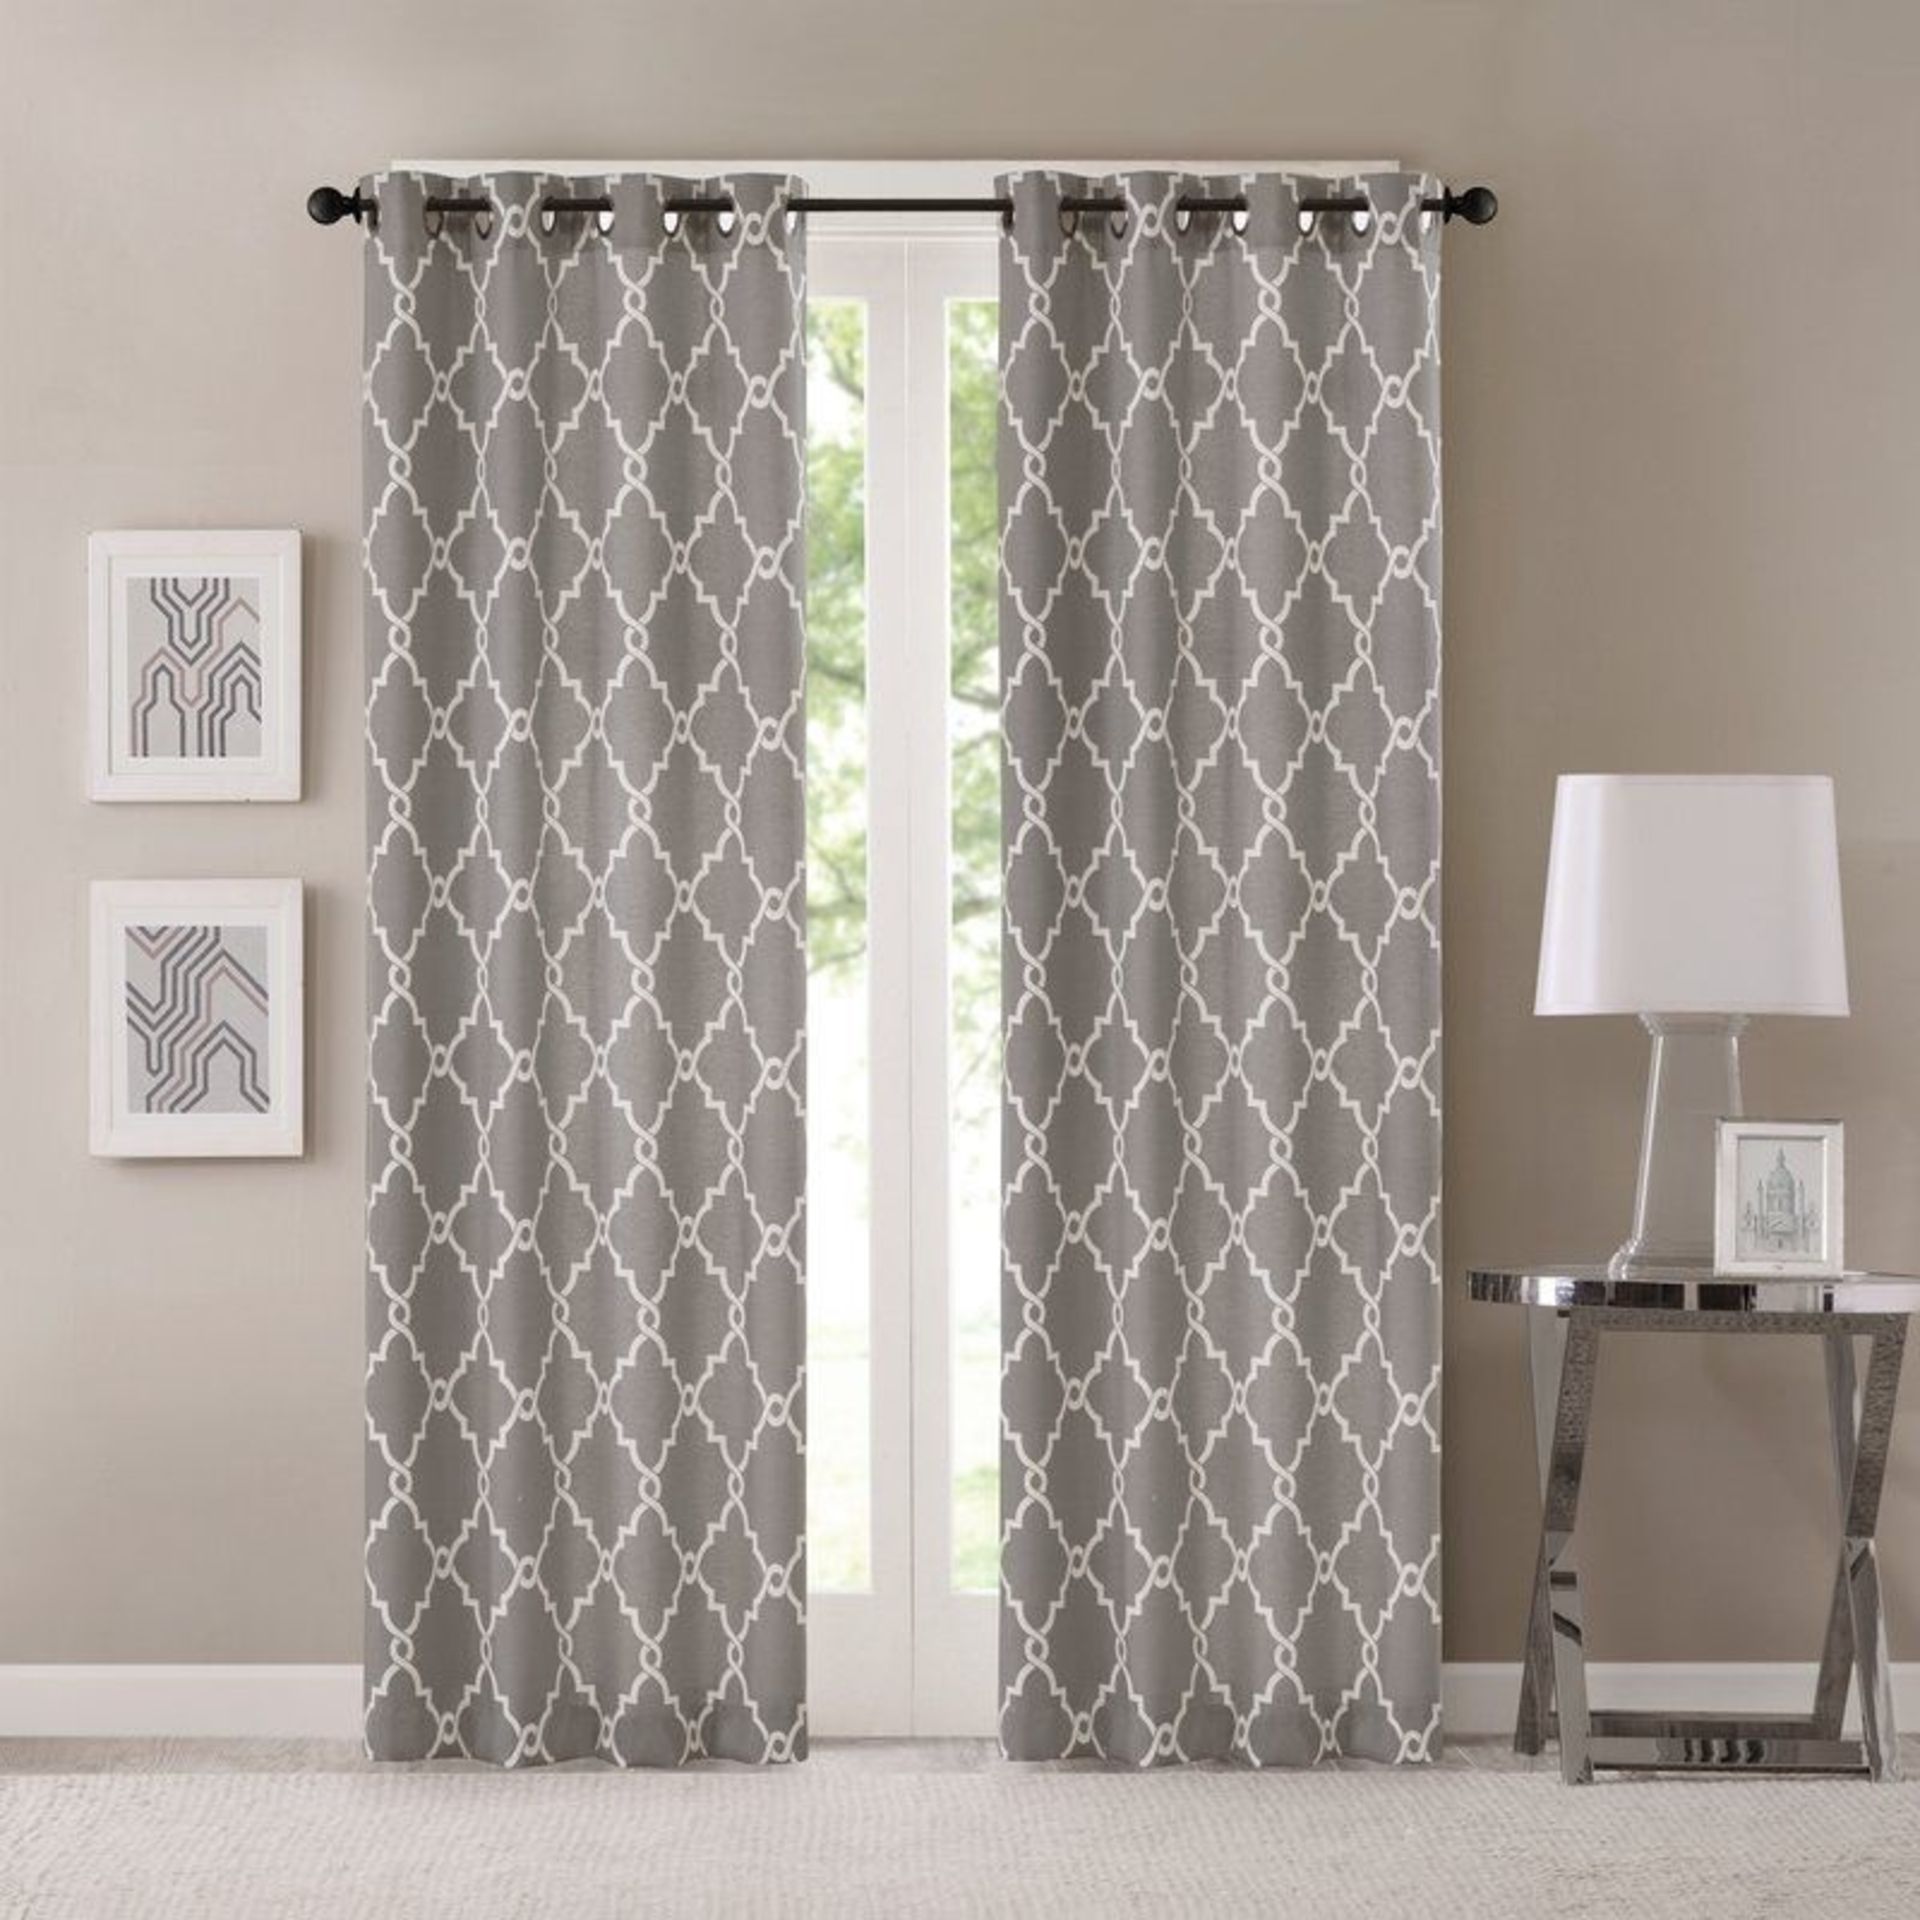 1 x Set of Madison Park Saratoga Grey Curtains 66x54"/168x137cm - Product Code MP40-0069UK (Brand